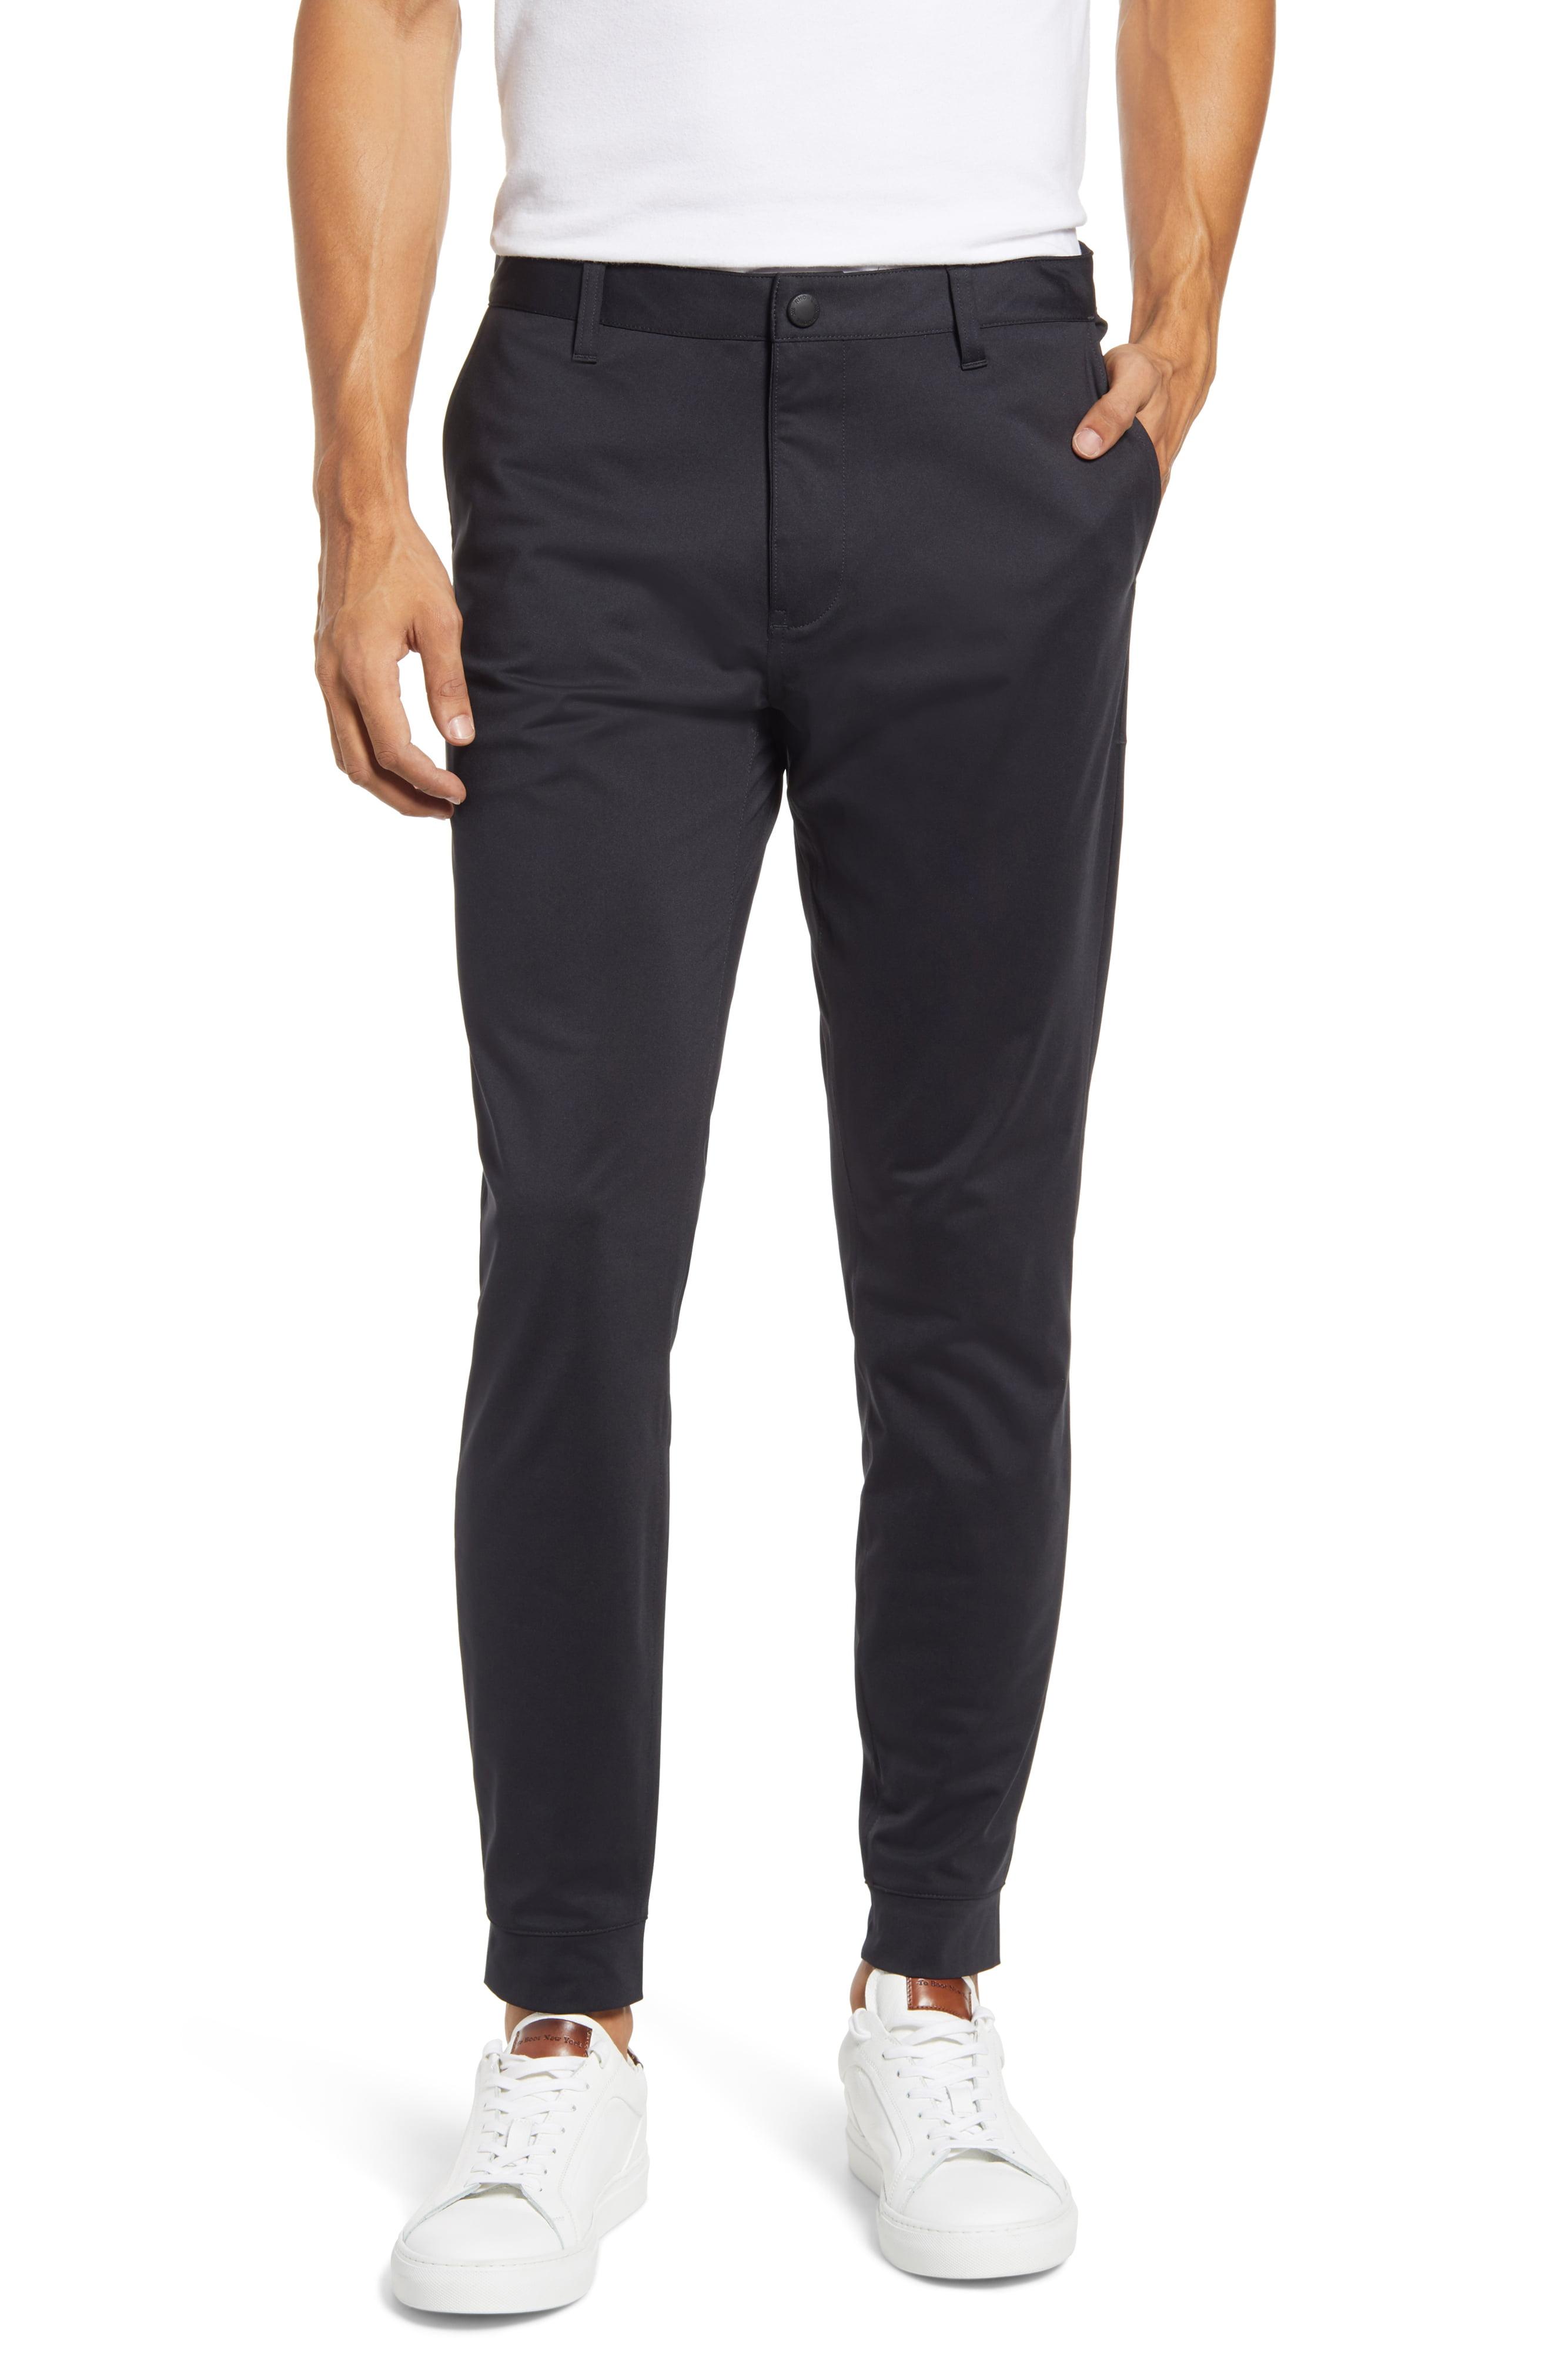 Rhone Commuter Slim Fit Jogger Pants in Black for Men - Lyst